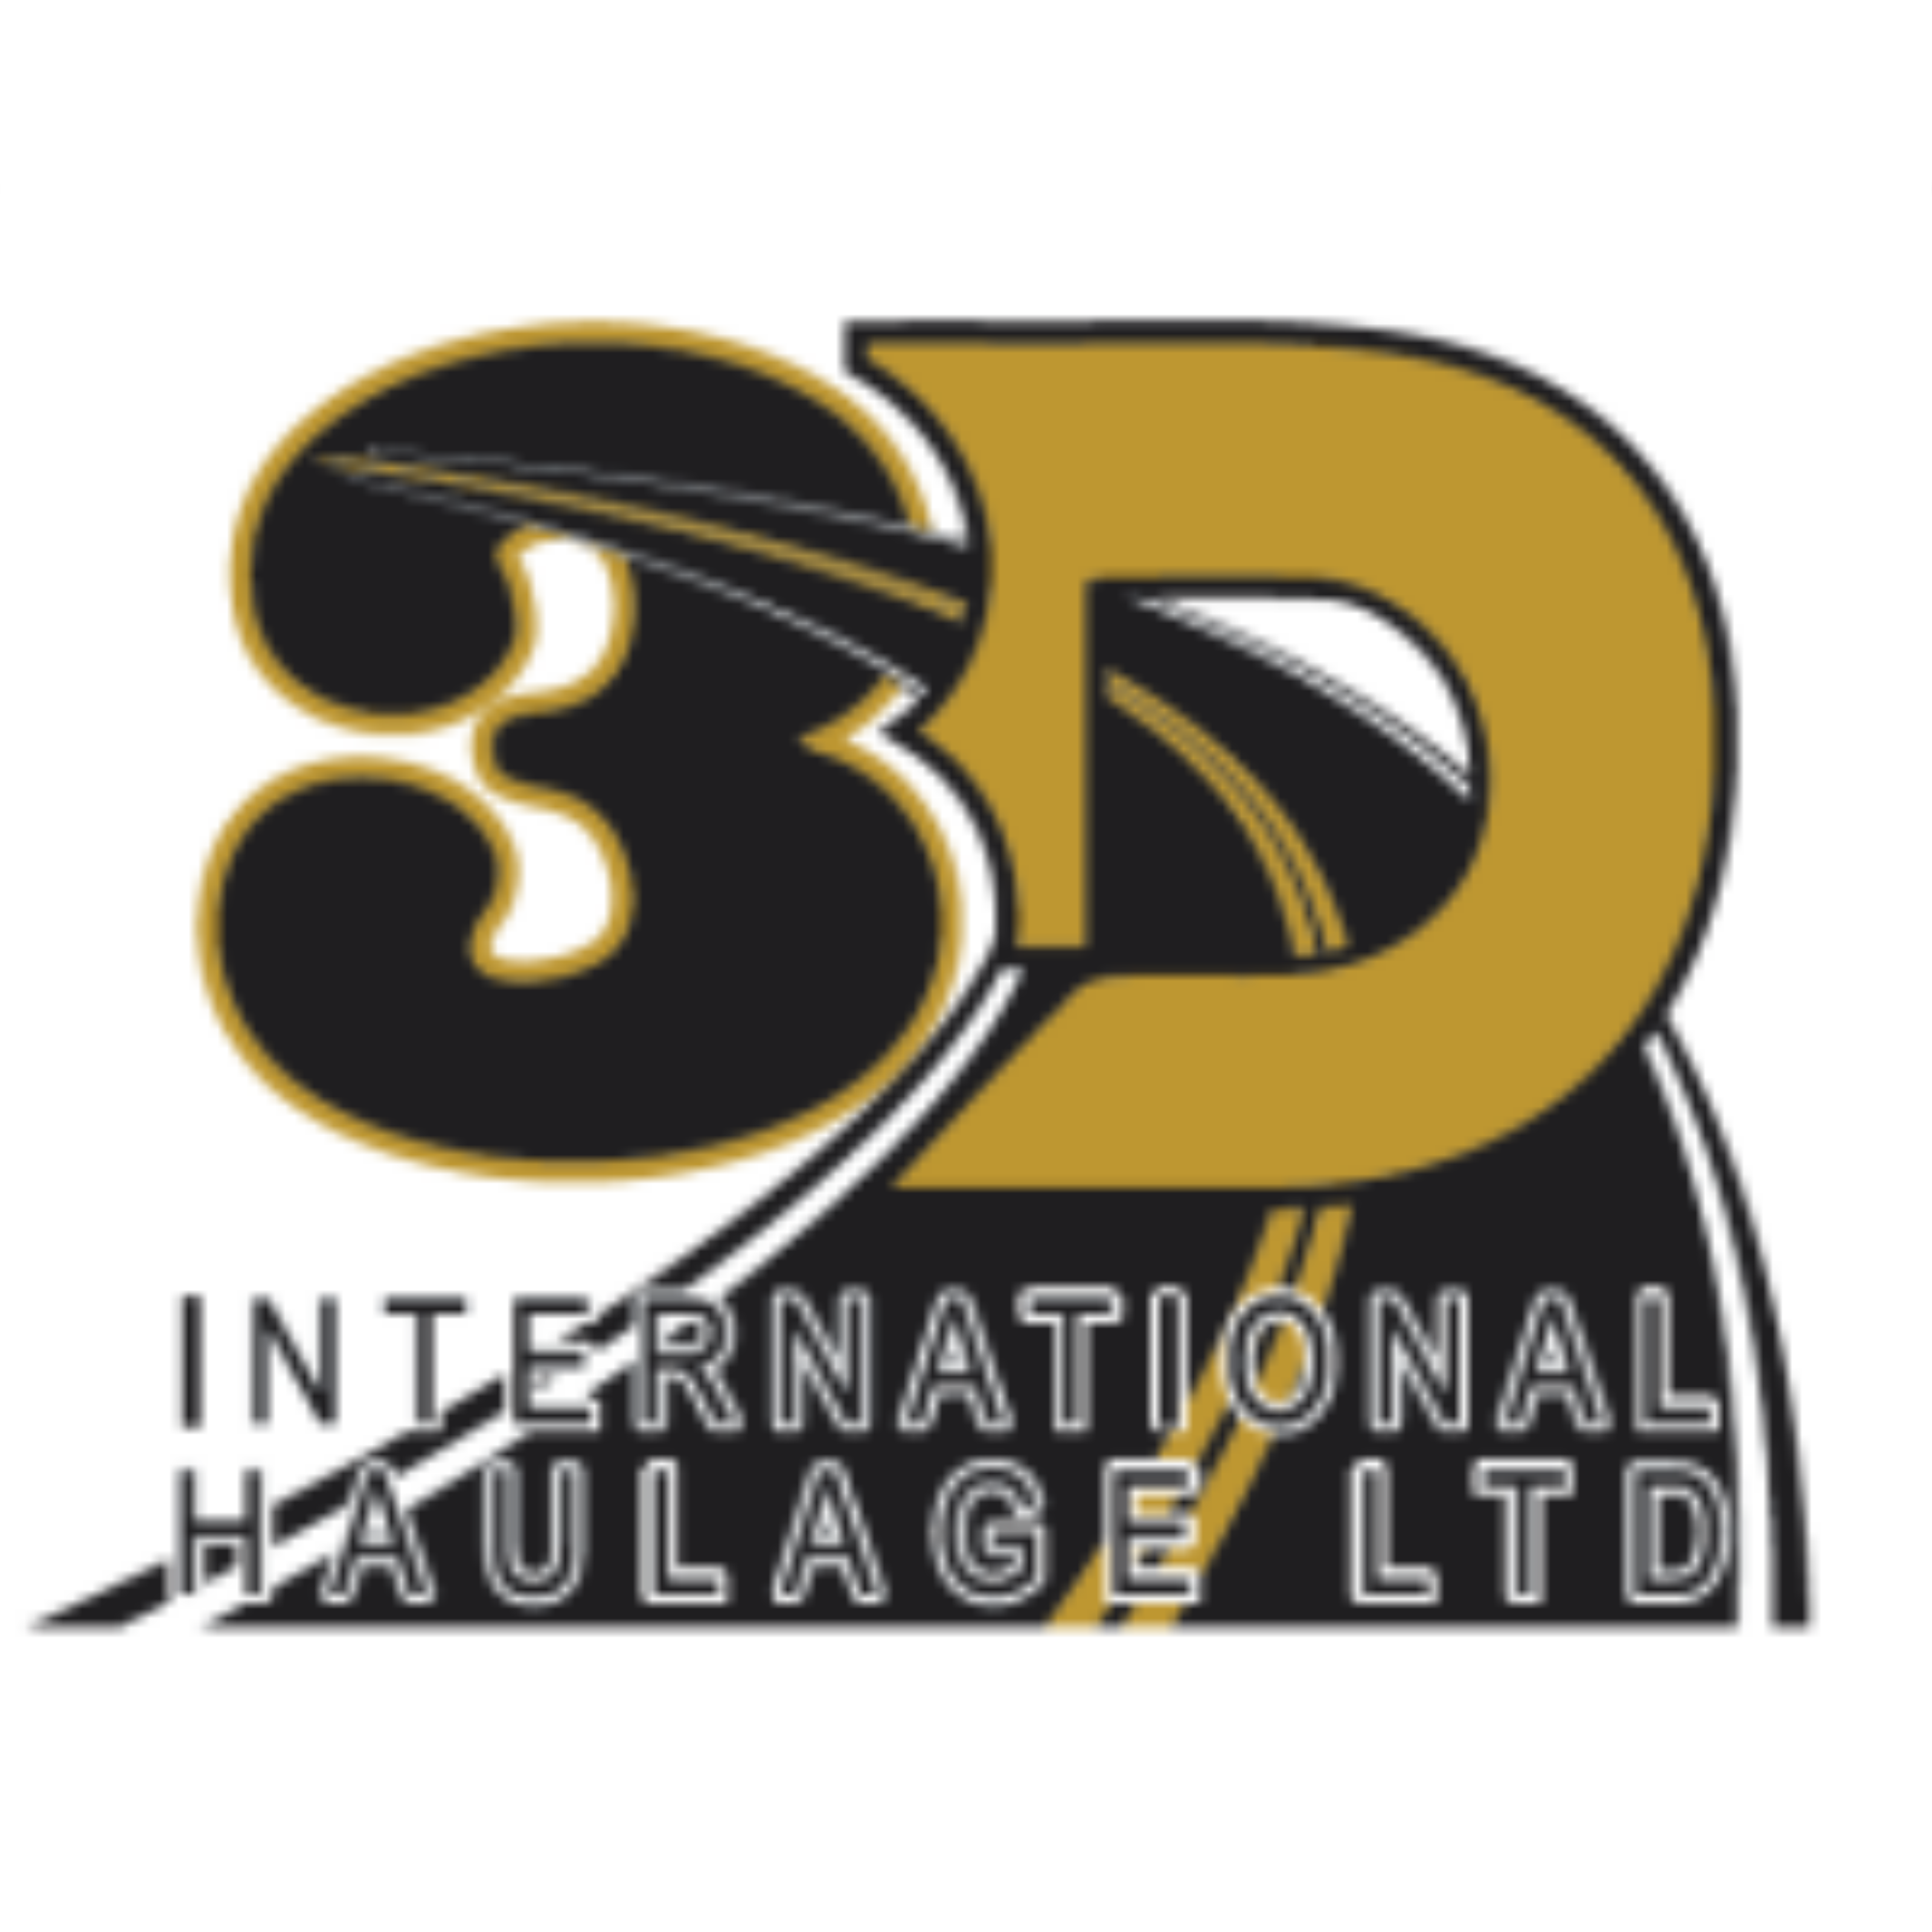 3D International Haulage